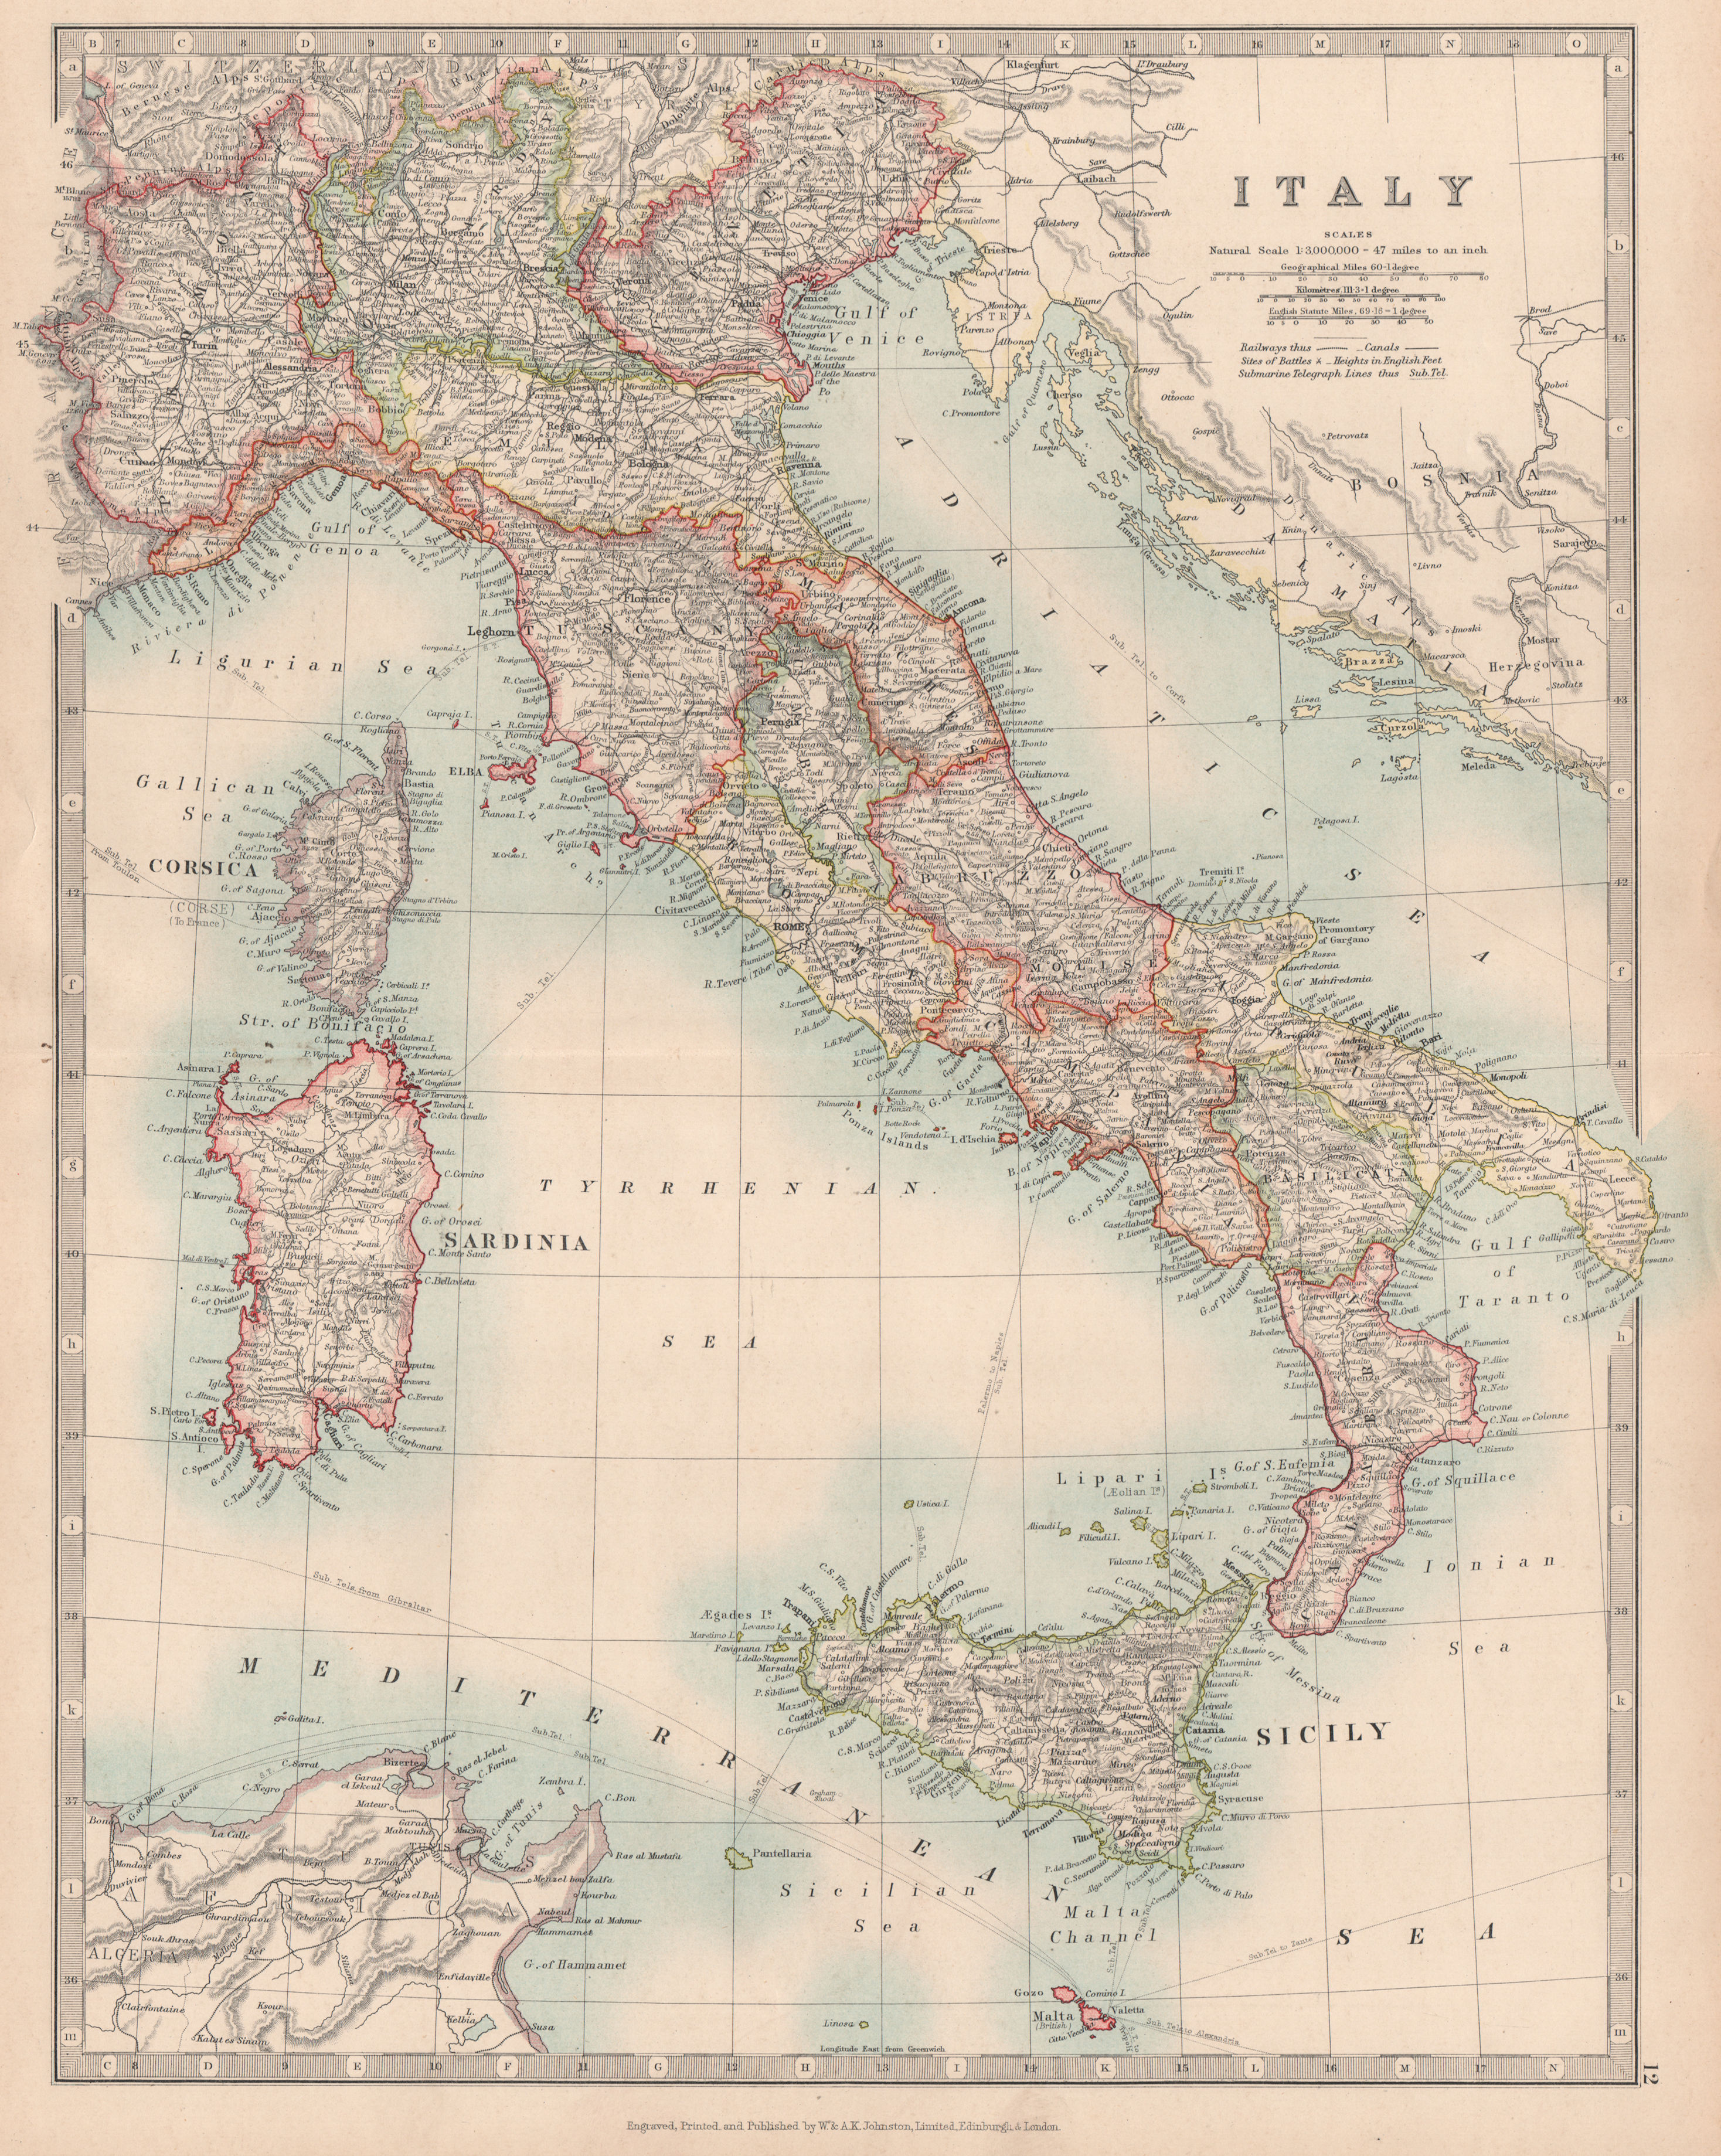 Associate Product ITALY. Railways. Key battlefields & dates. JOHNSTON 1912 old antique map chart